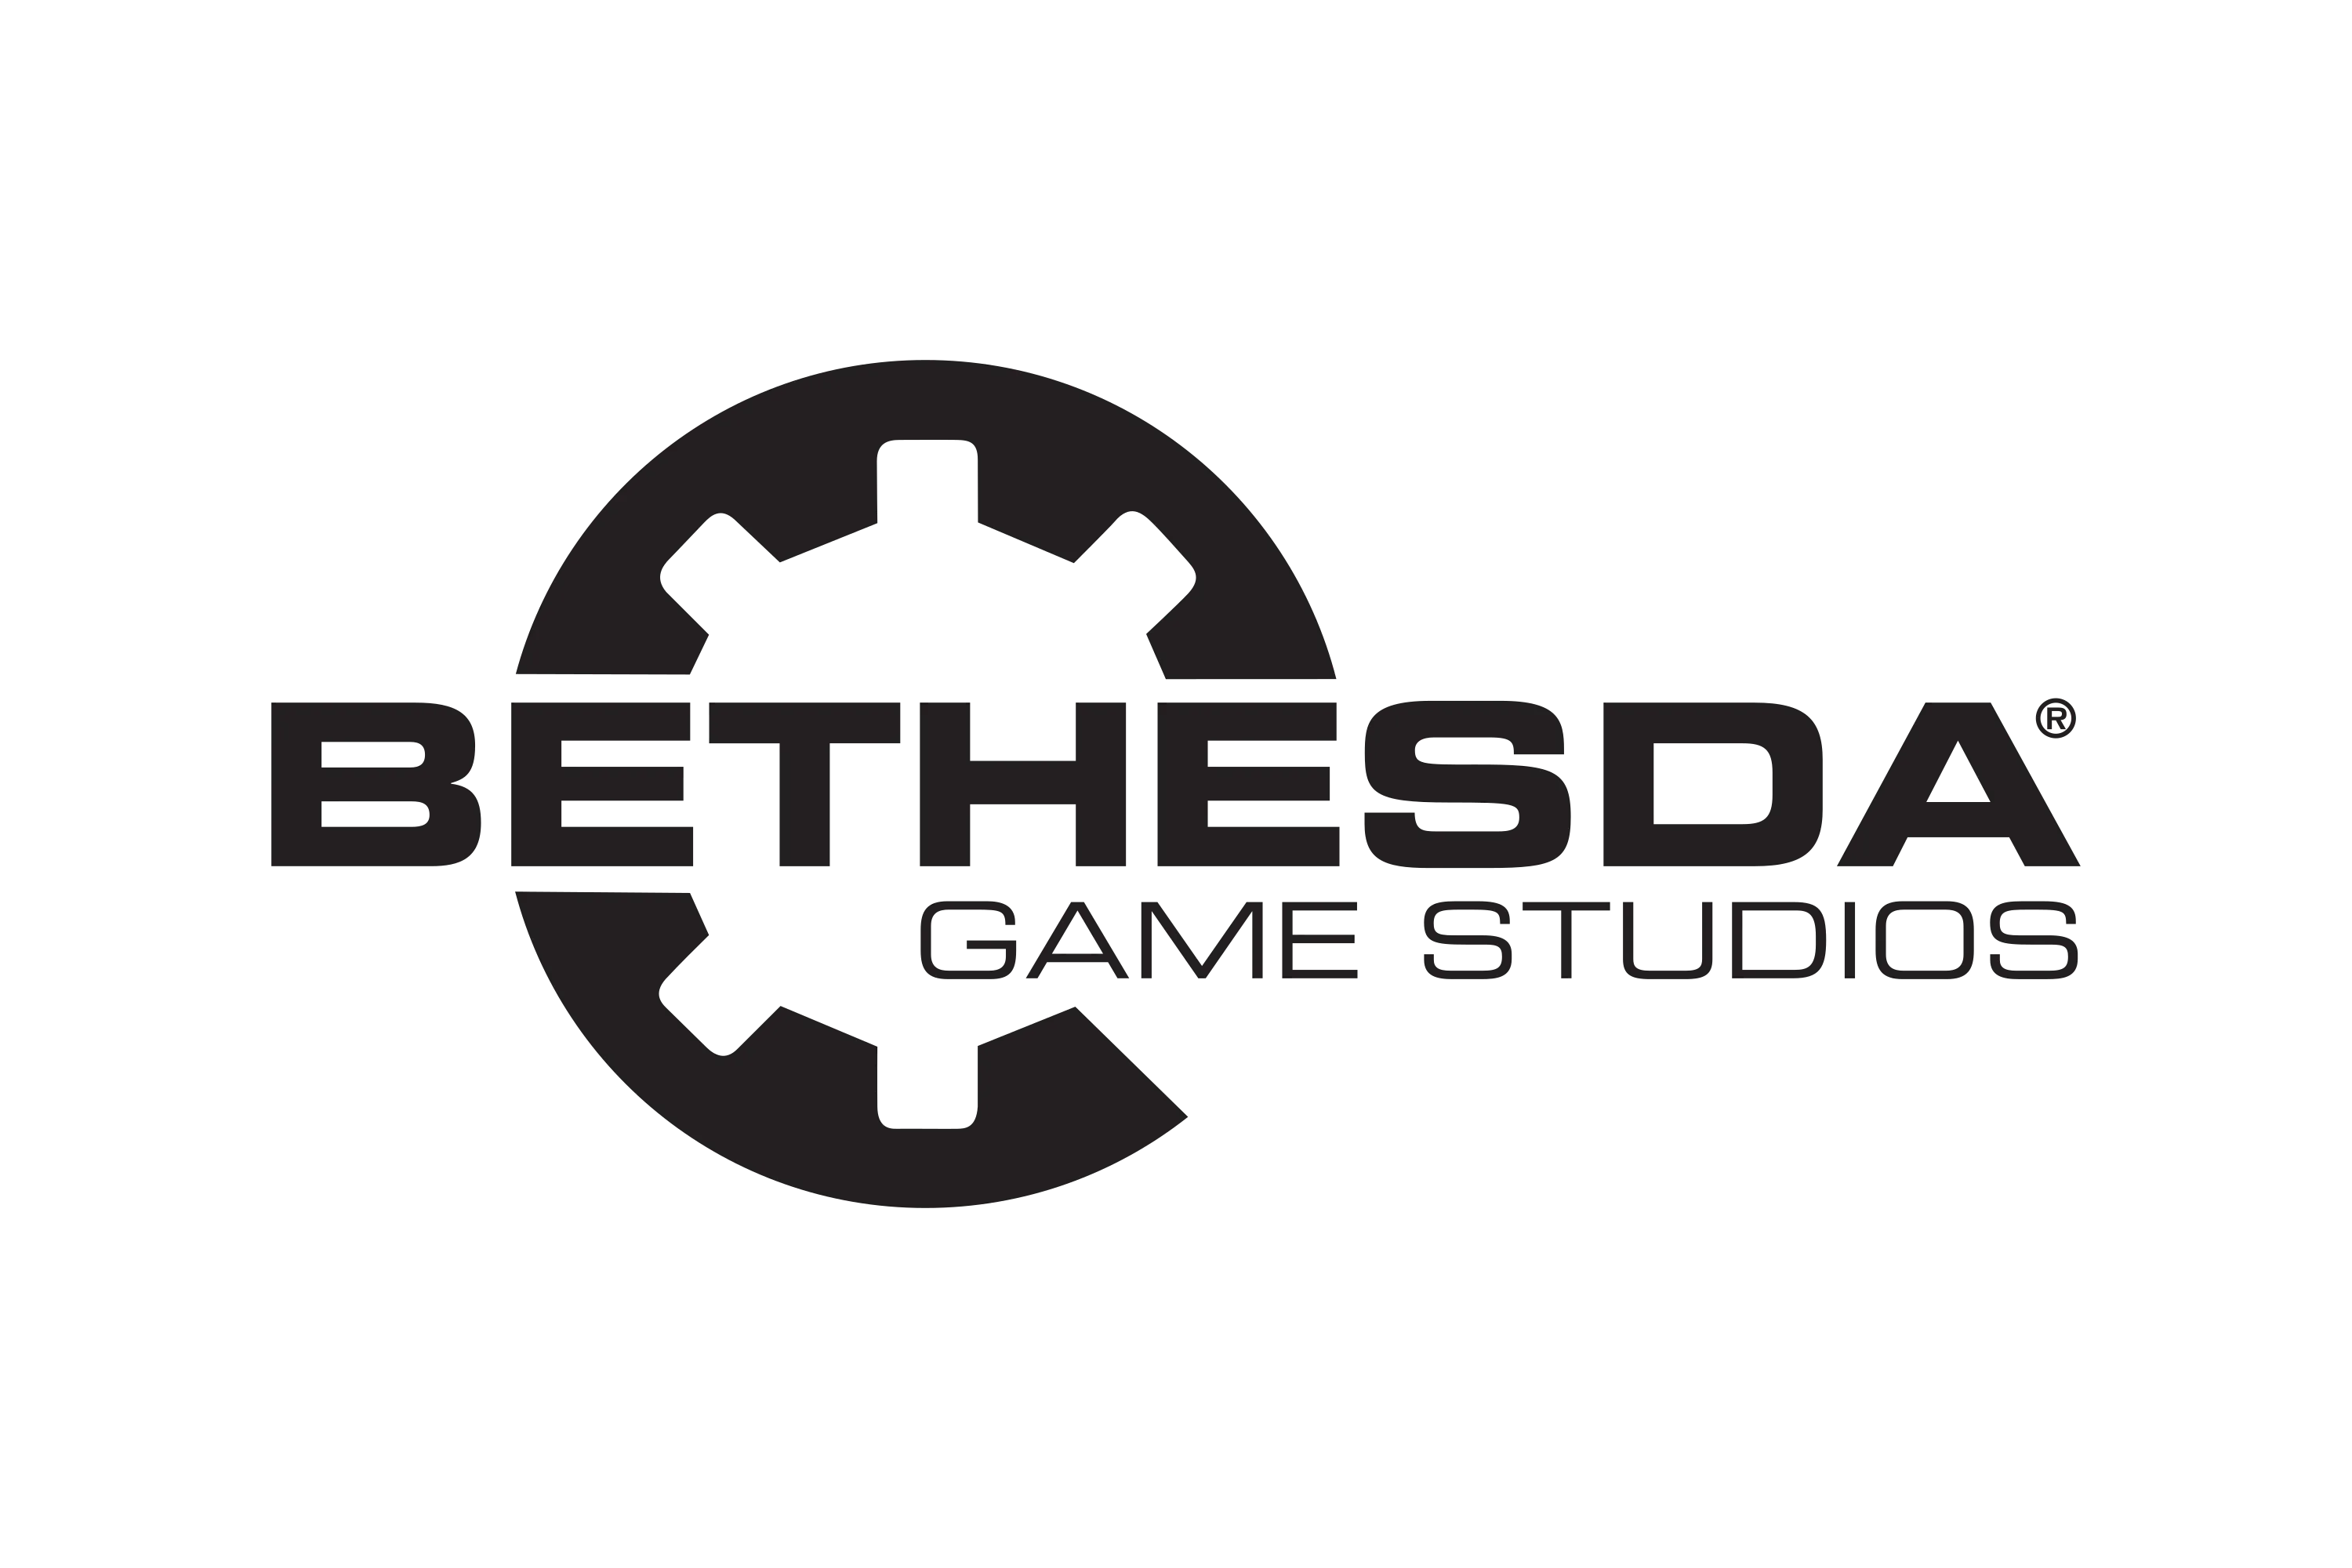 bethesda game studios logowinef1634132532